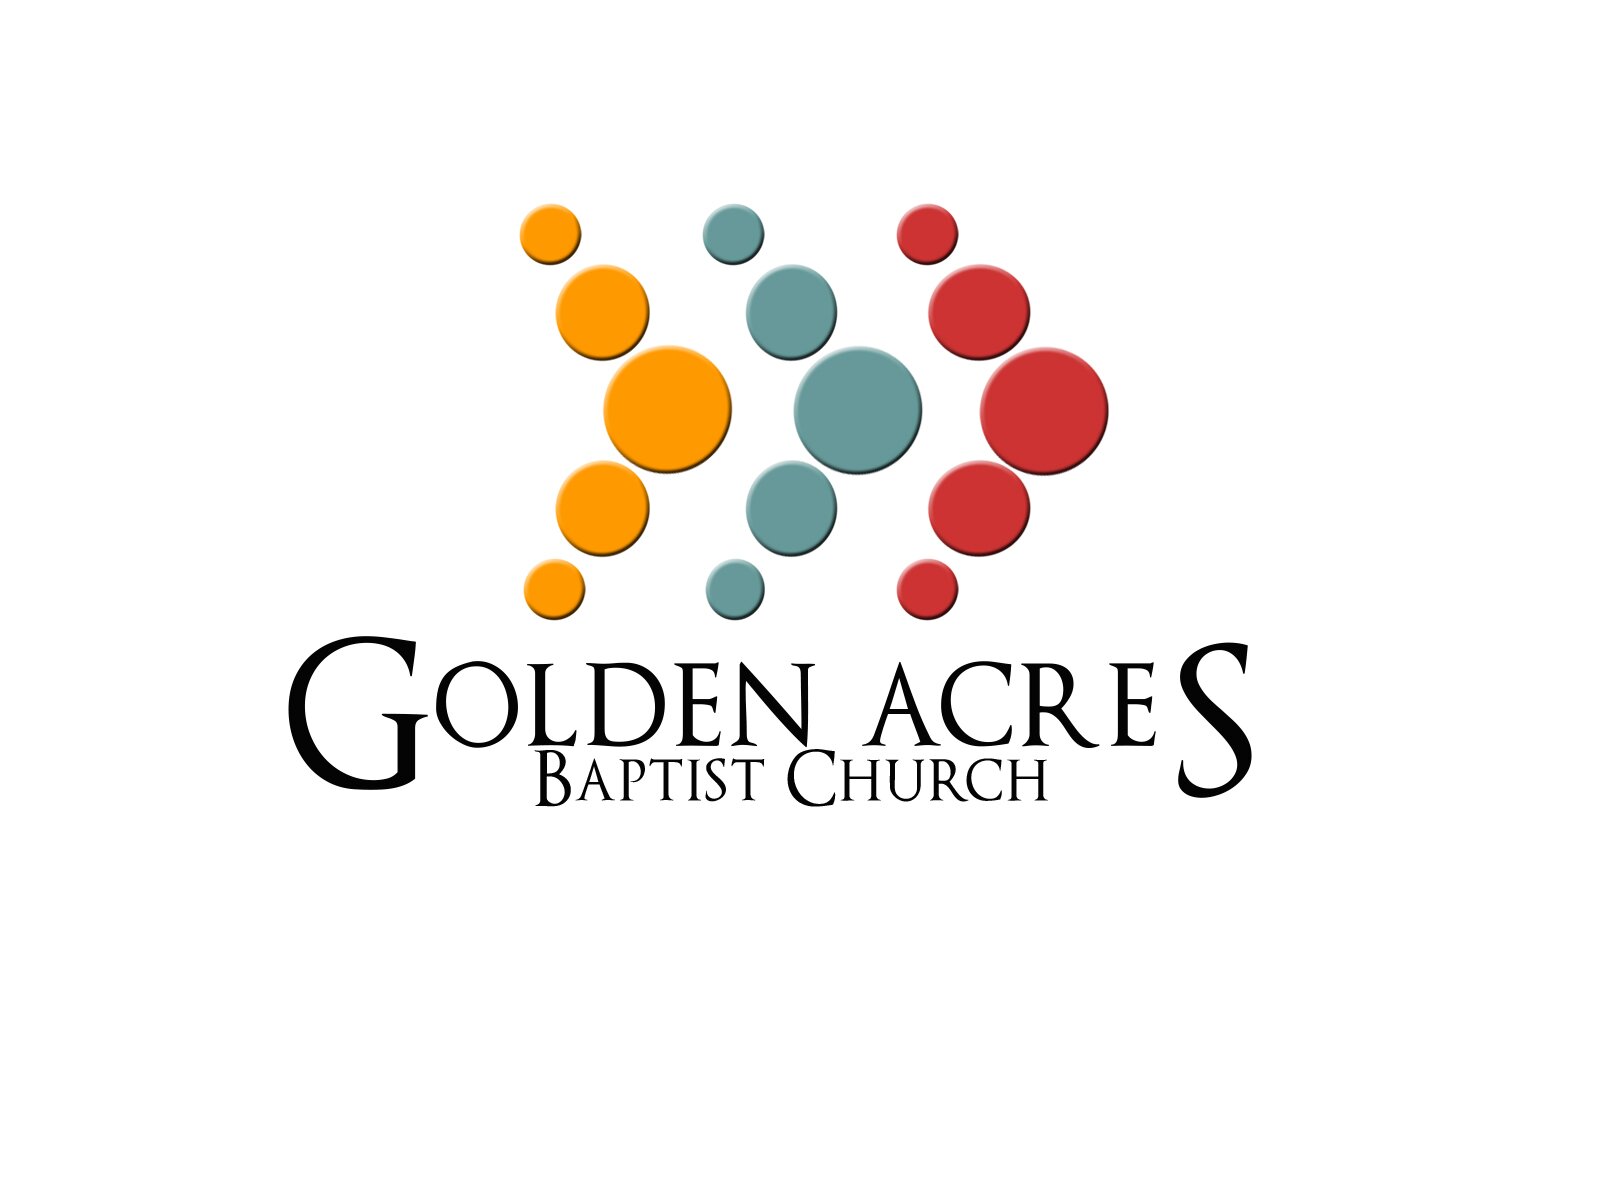 Golden Acres Baptist